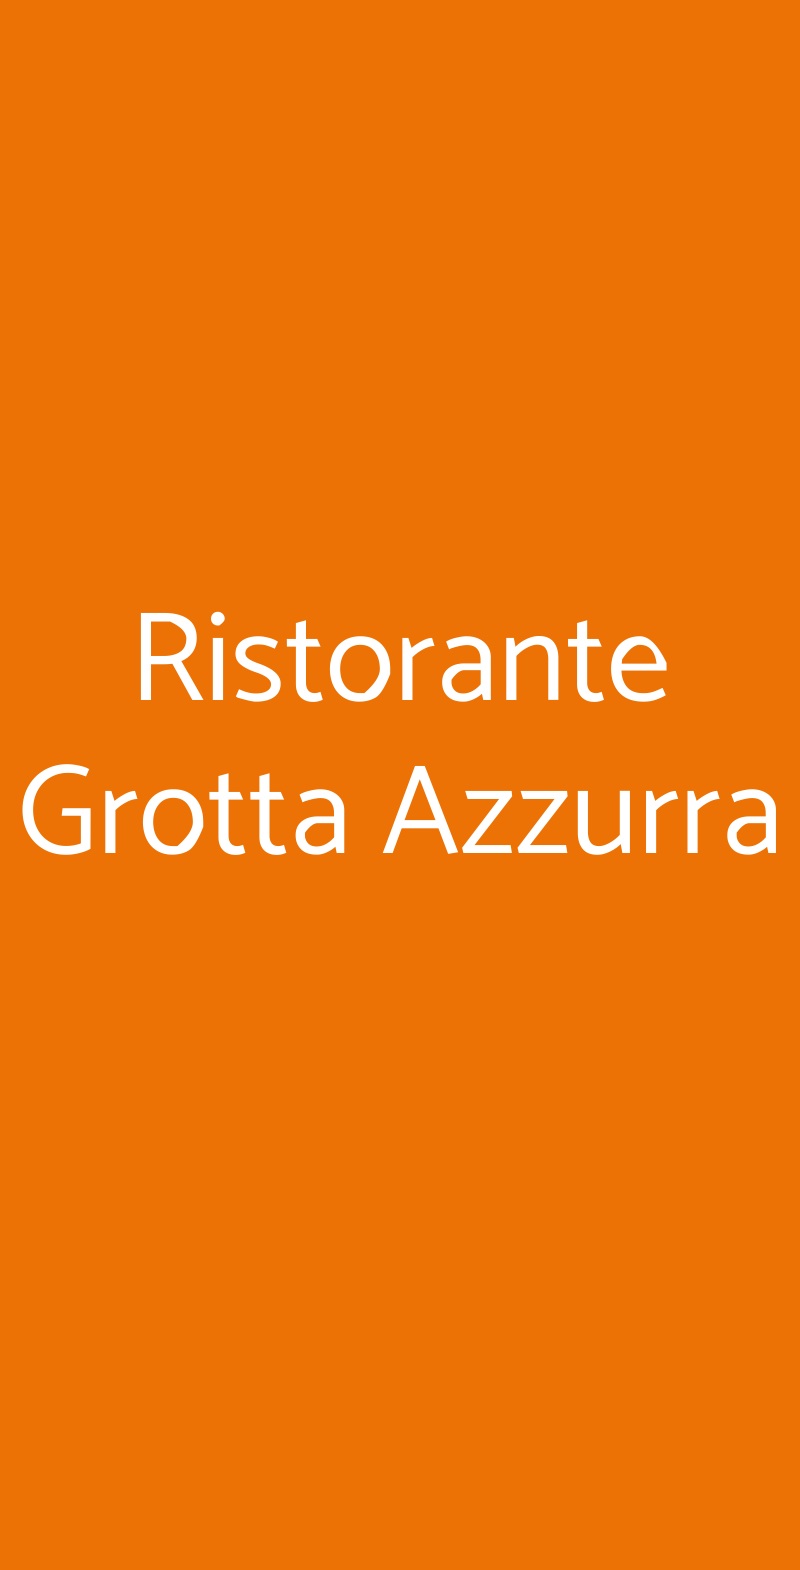 Ristorante Grotta Azzurra Piacenza menù 1 pagina